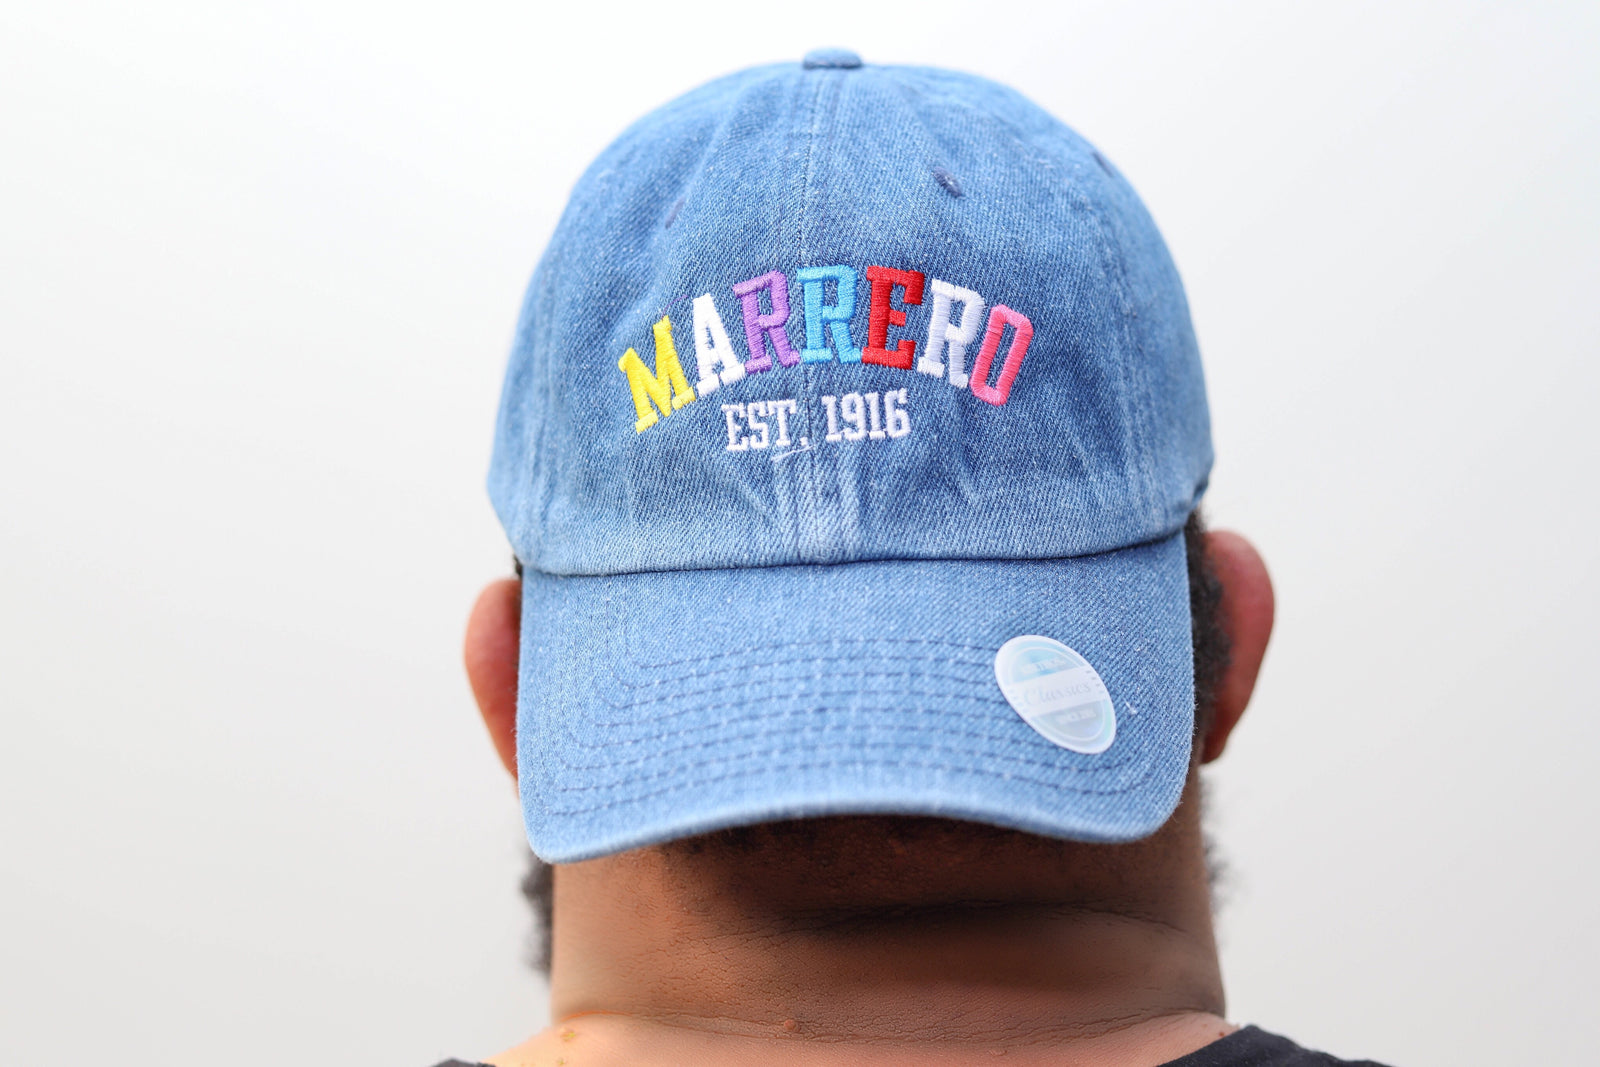 Load image into Gallery viewer, Hood Love Marrero Caps
